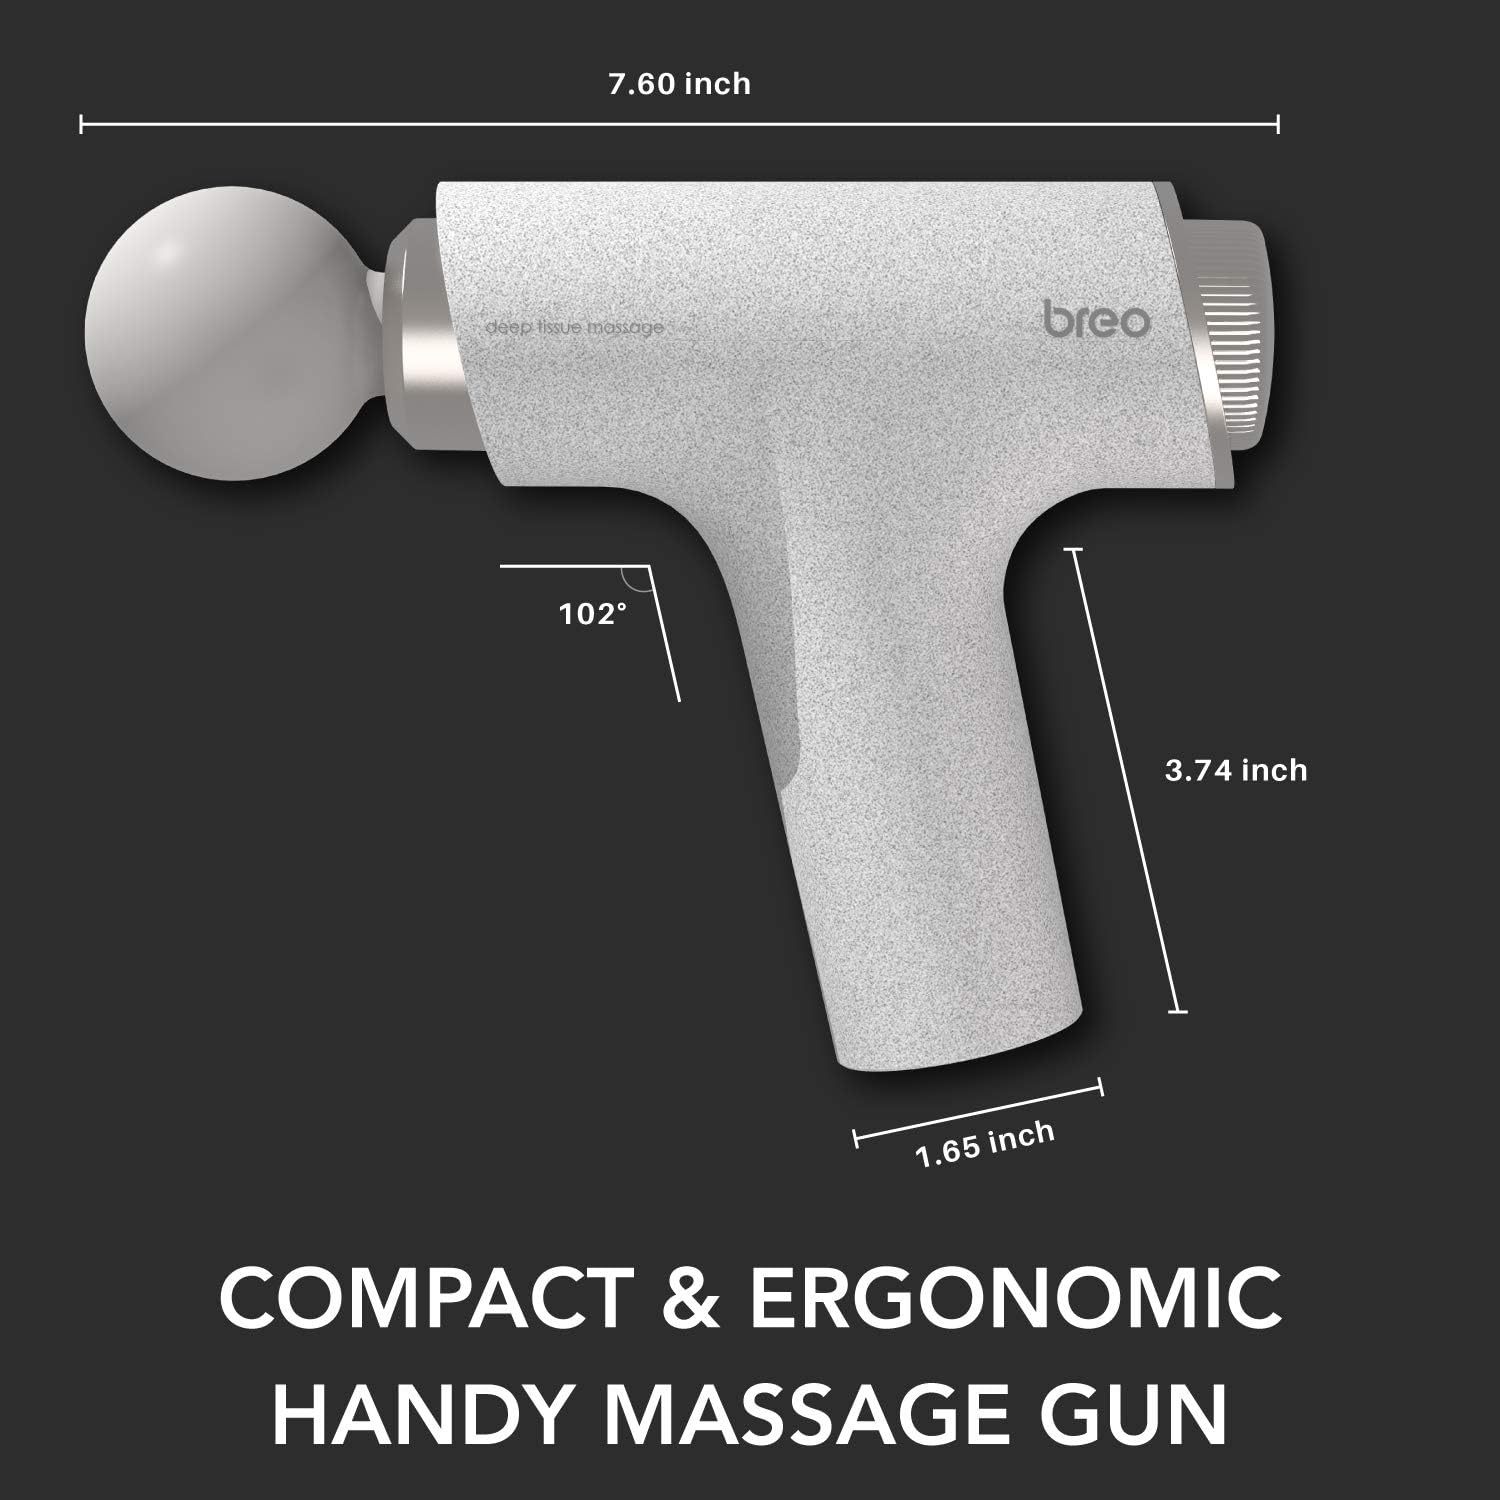 Breo Mini Massage Gun